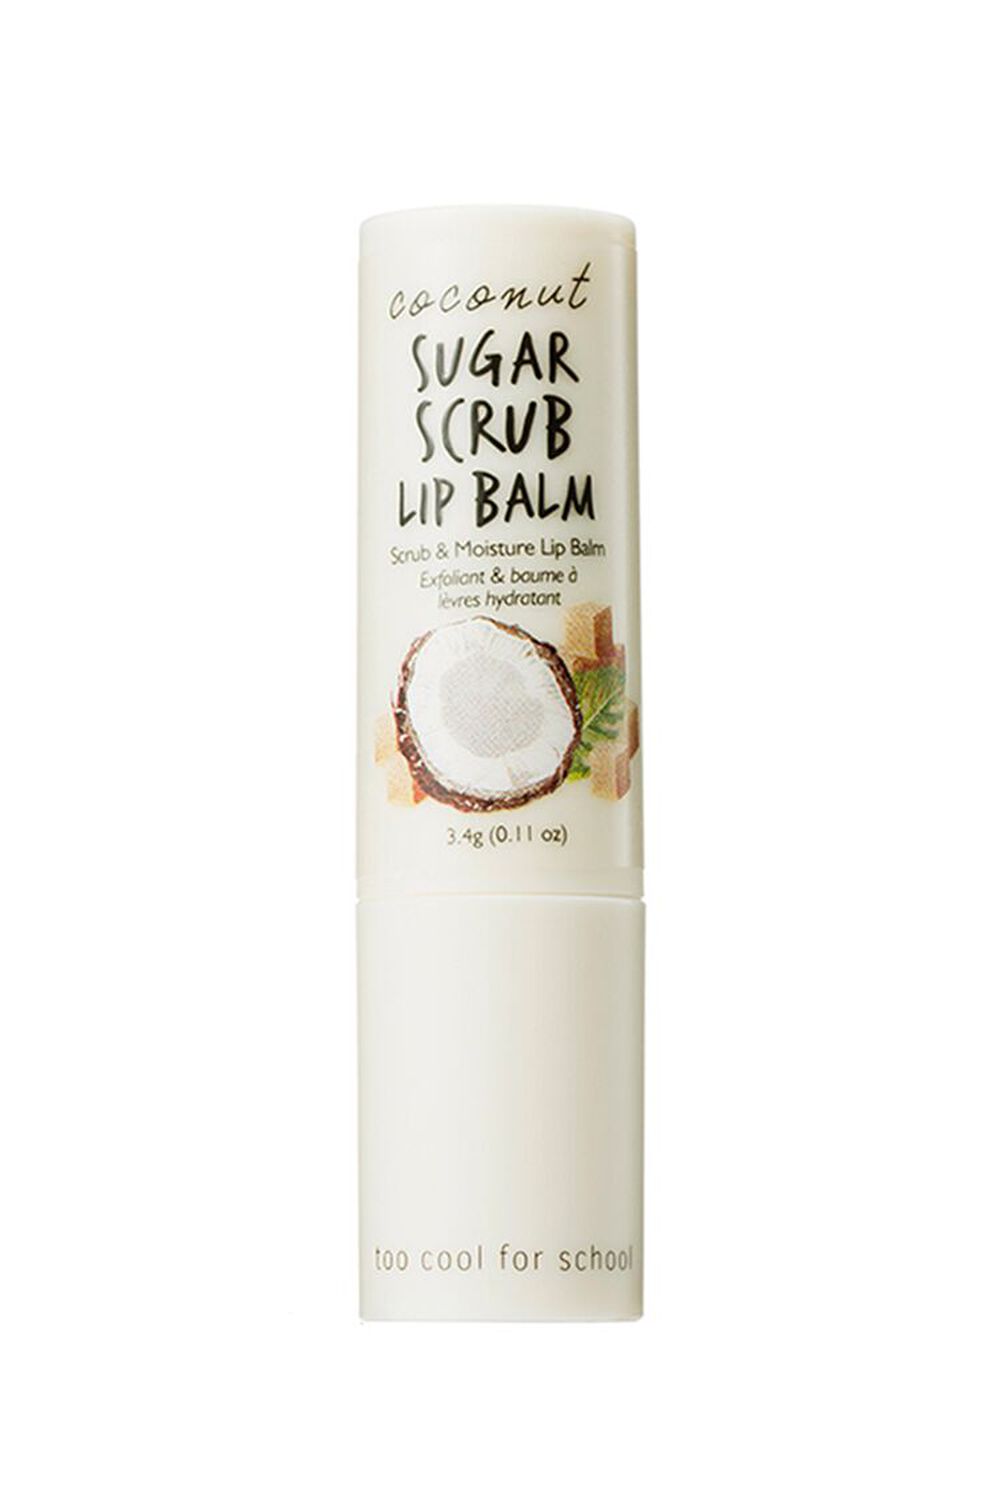 Too Cool For School Coconut Sugar Scrub Lip Balm, image 1